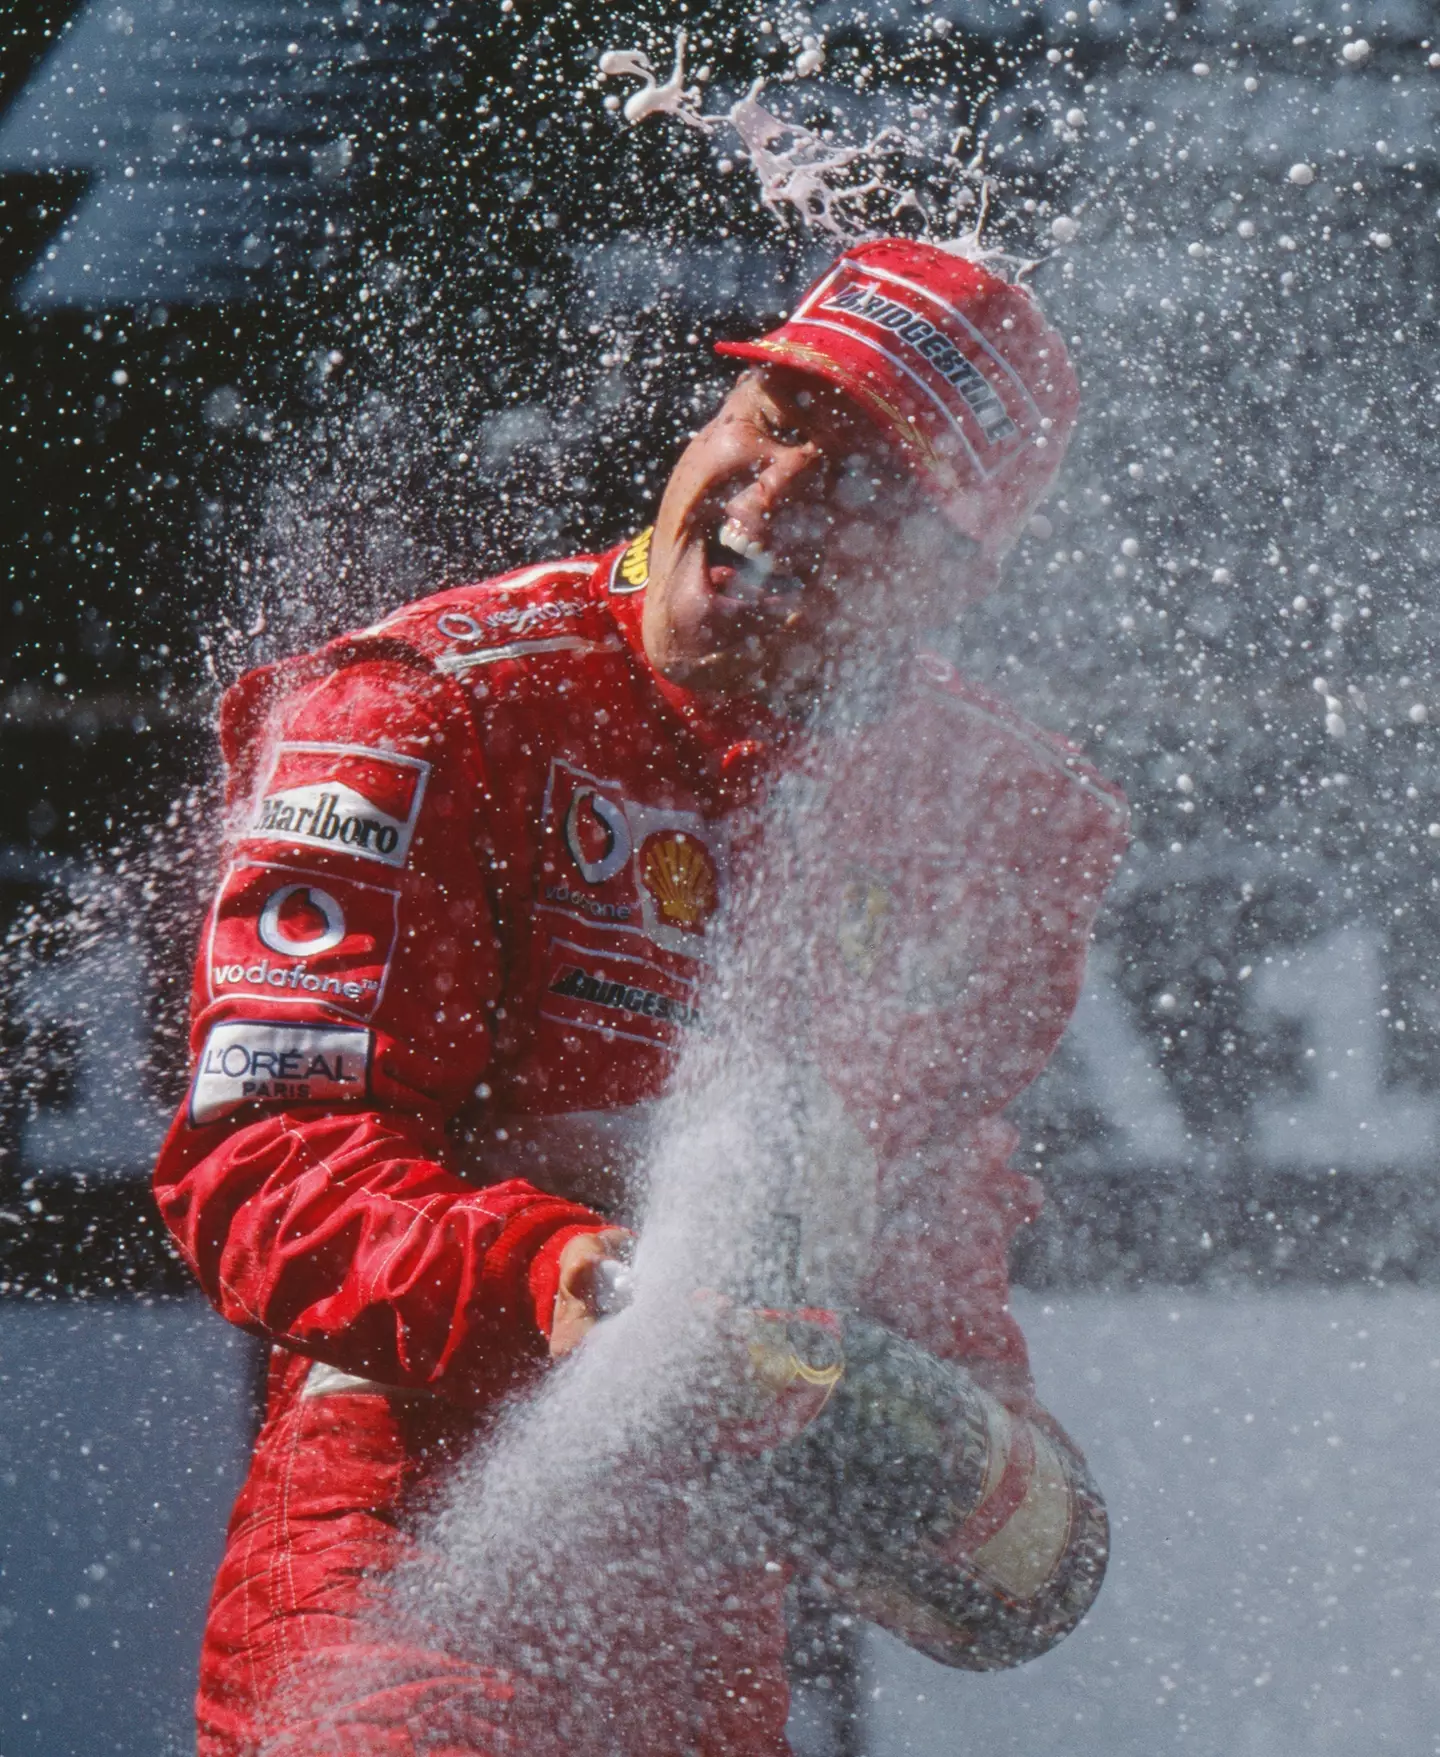 World champ Michael Schumacher.